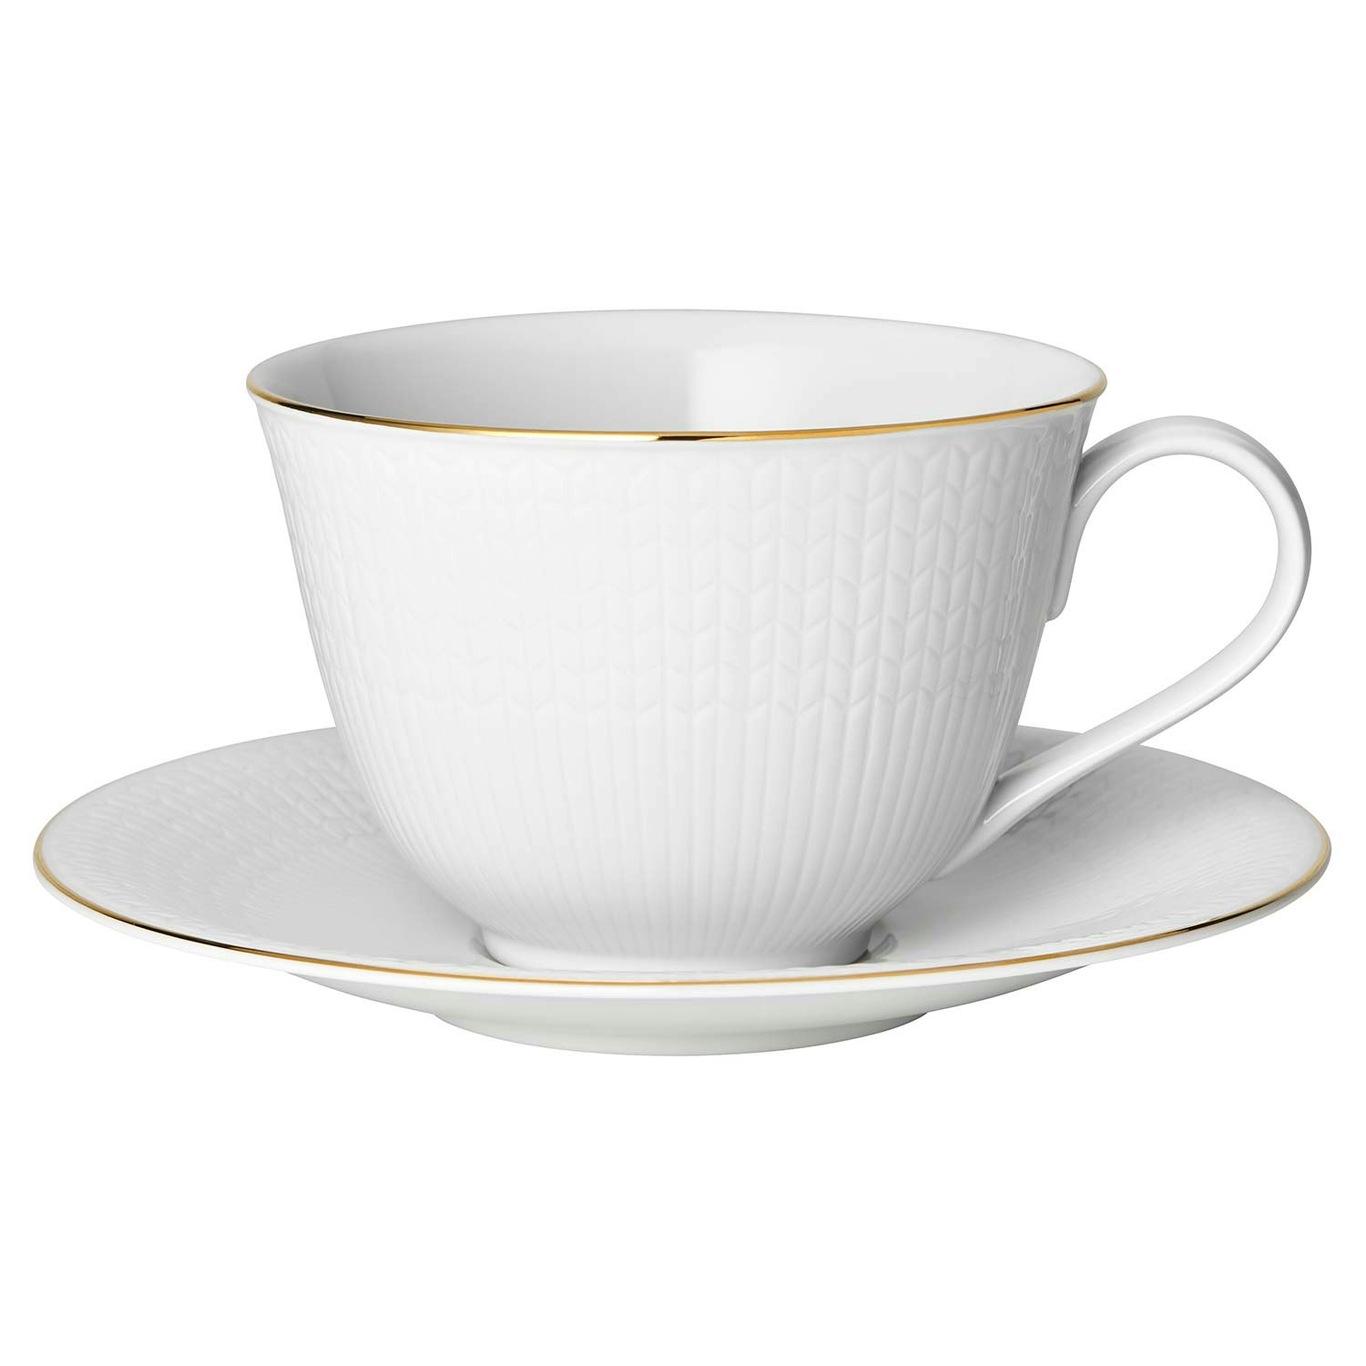 https://royaldesign.com/image/2/rorstrand-swedish-grace-gala-tea-cup-saucer-45-cl-0?w=800&quality=80